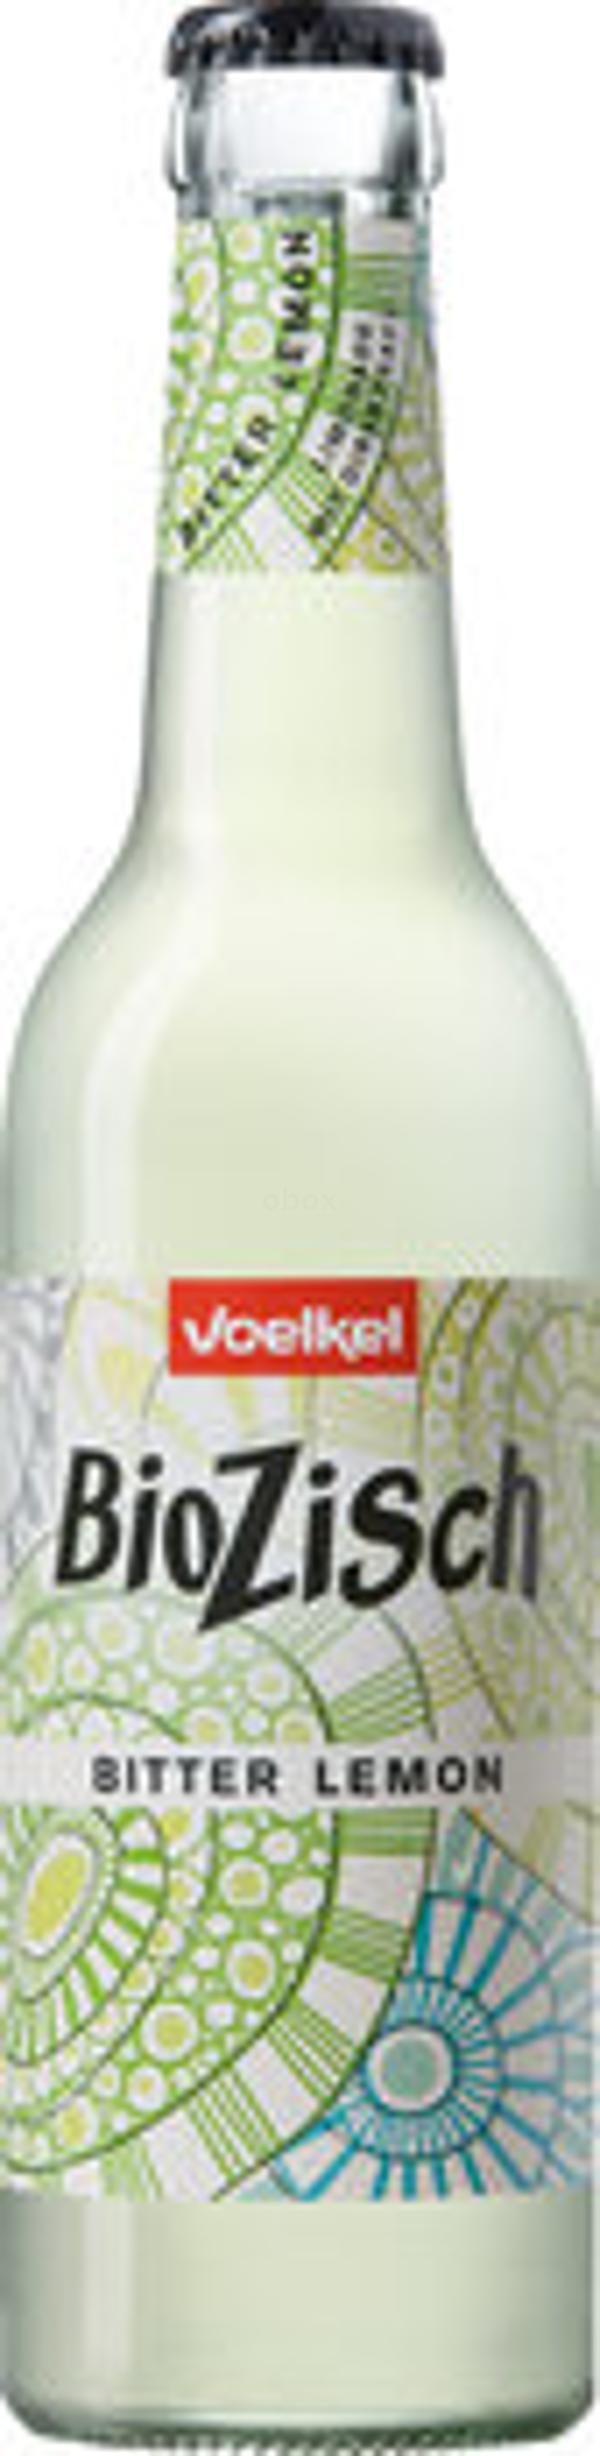 Produktfoto zu BioZisch Bitter Lemon, 12x0,33 l